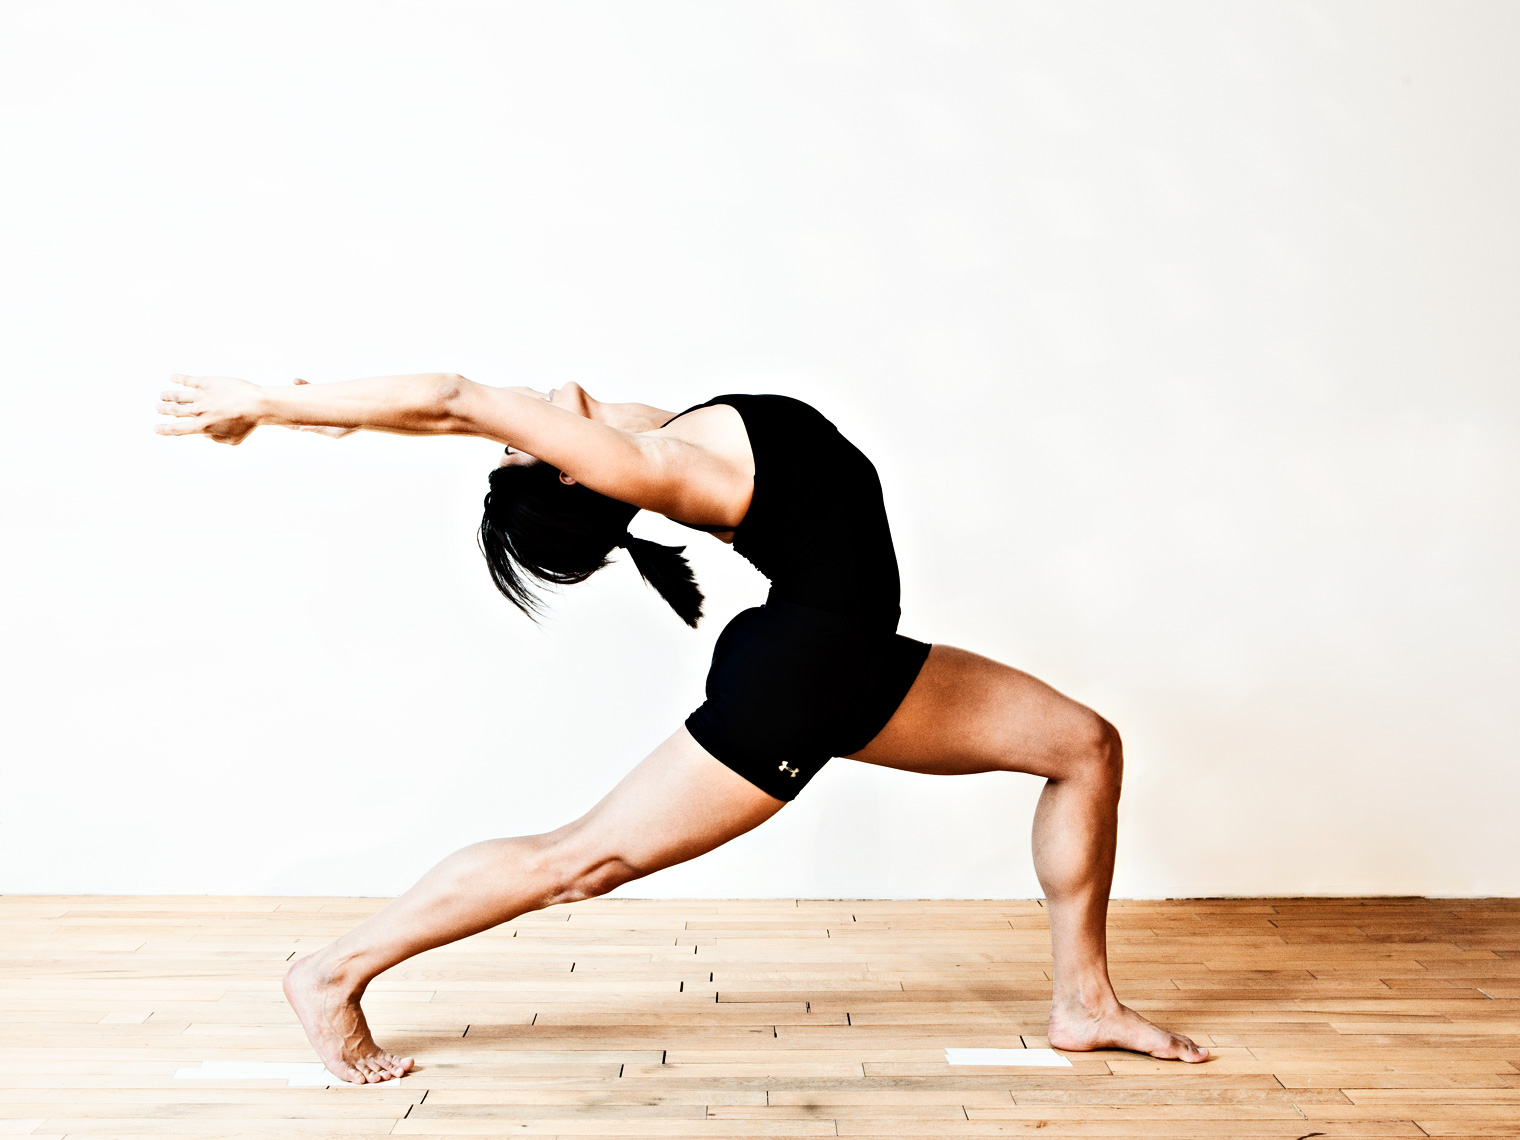 Photograph of female yoga practisioner